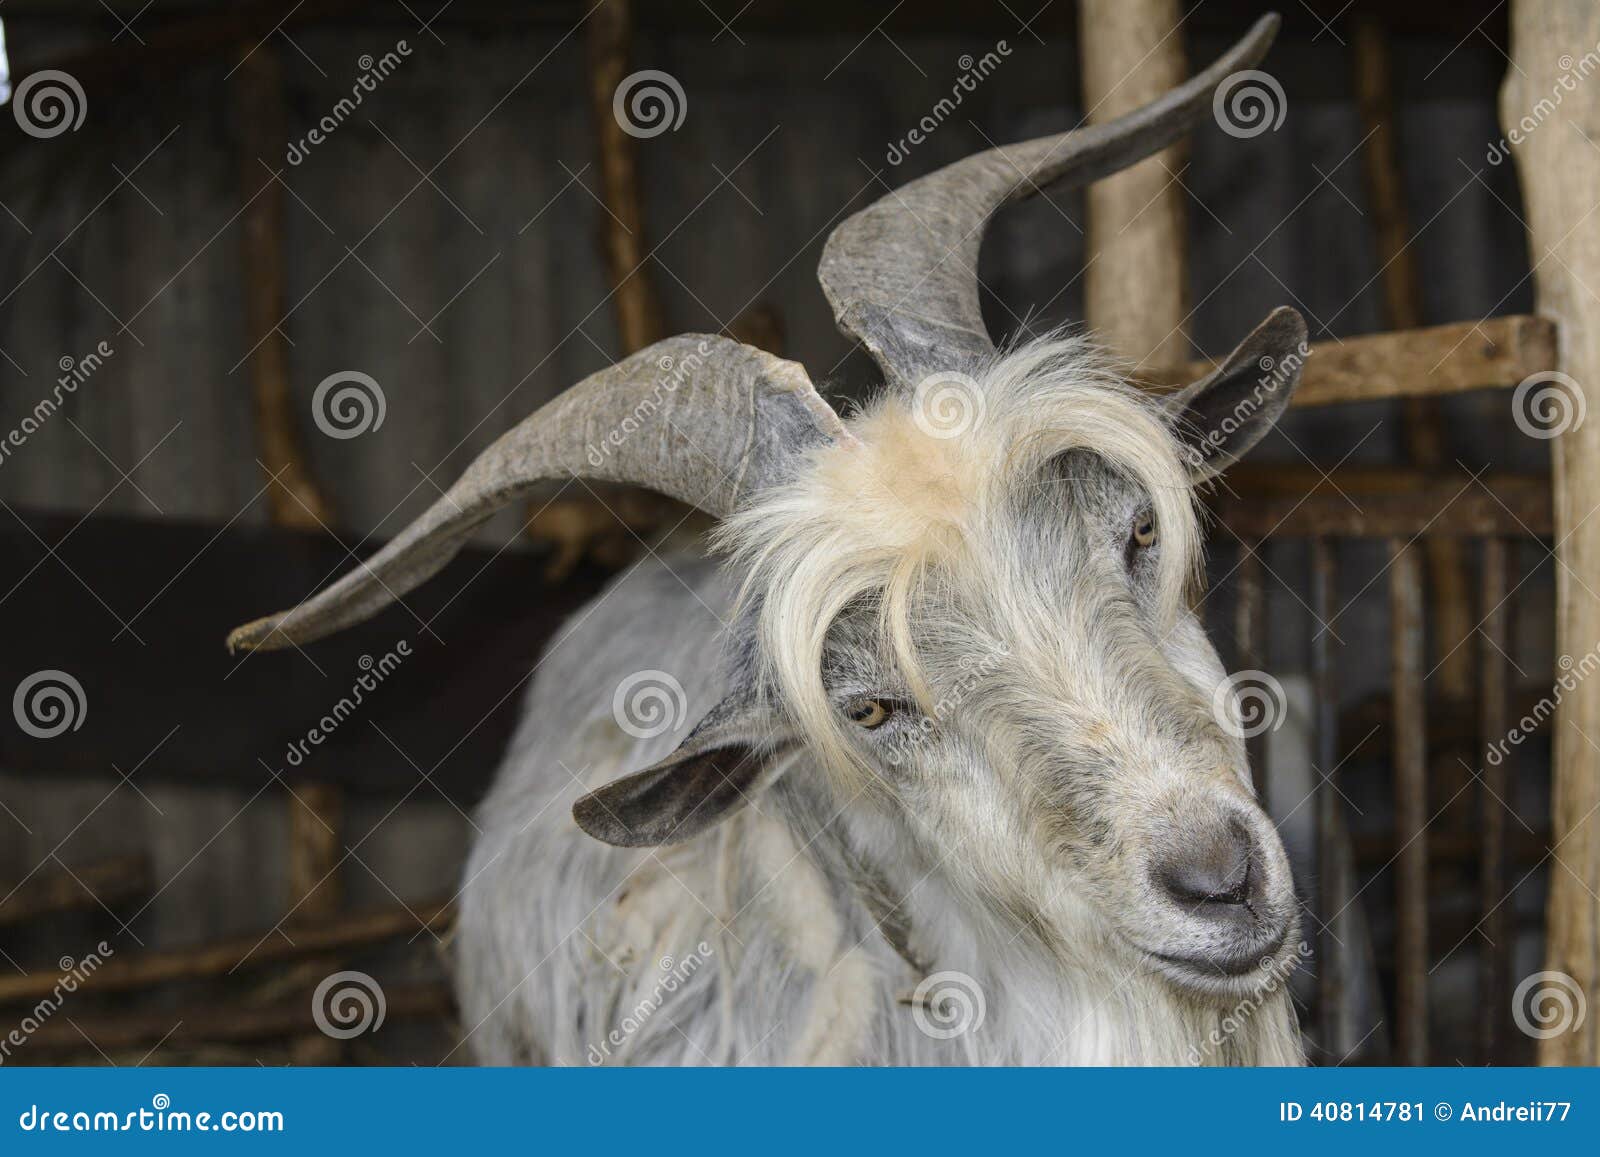 11,481 Old Goat Stock Photos - Free & Royalty-Free Stock Photos